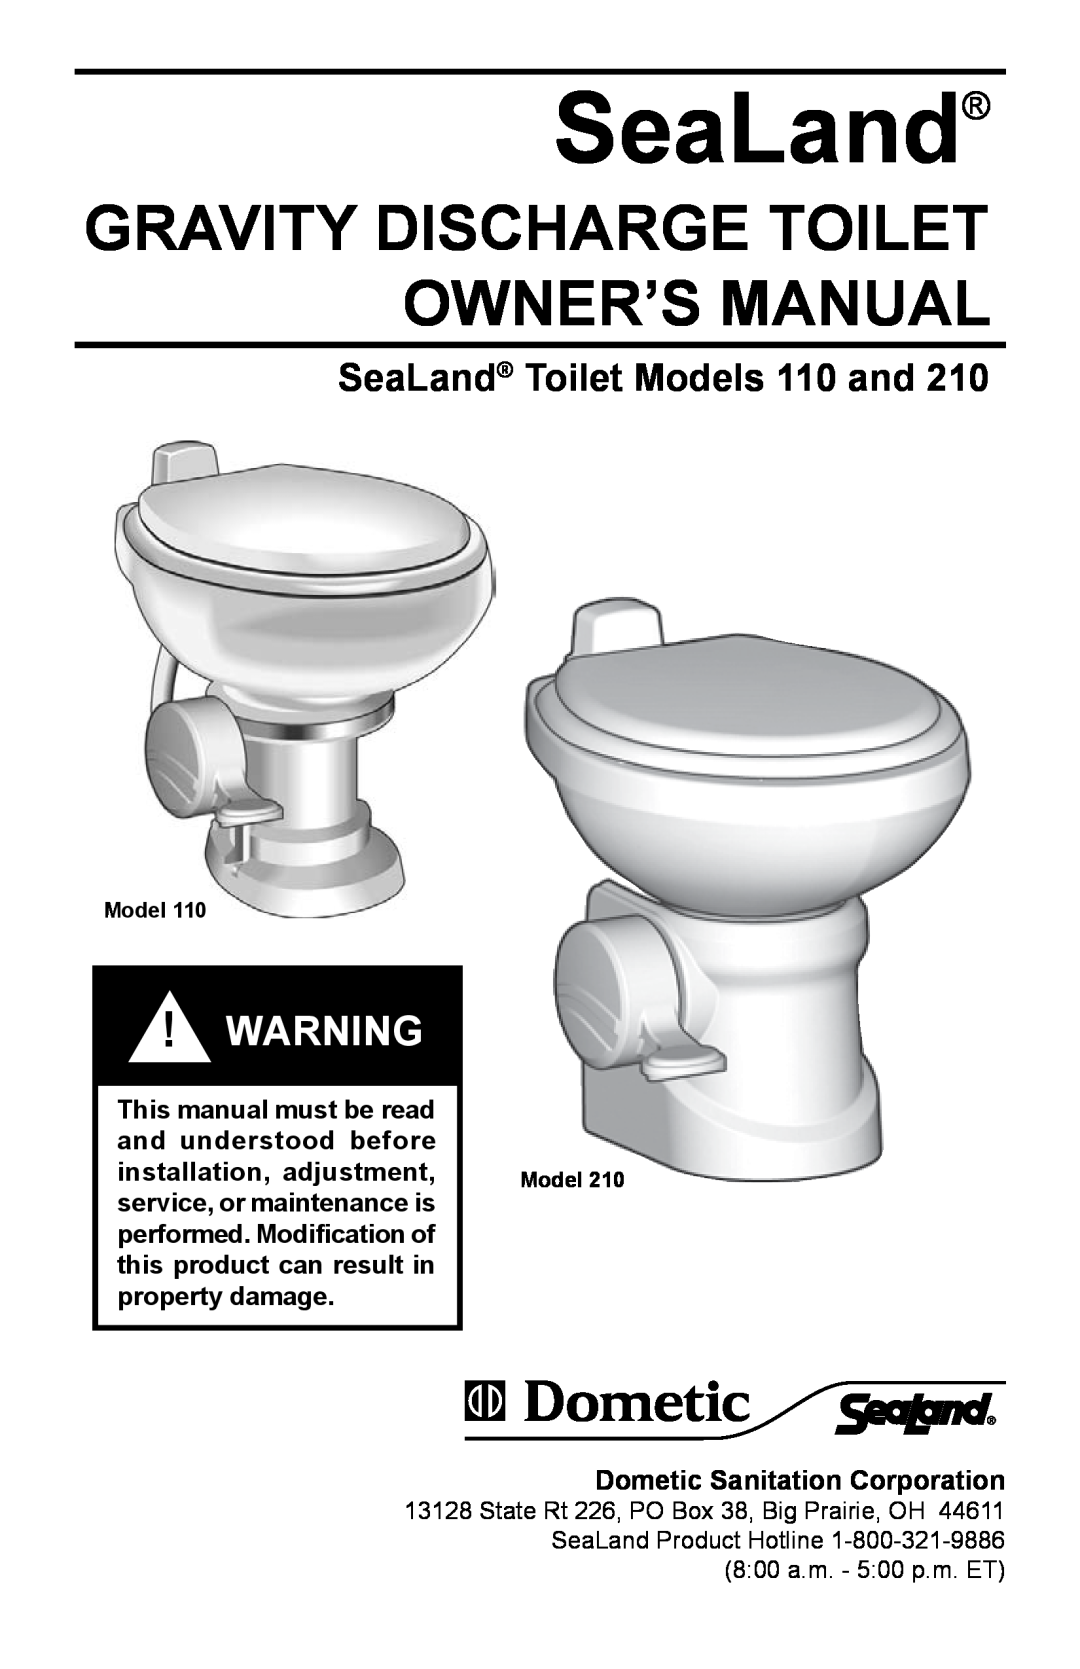 Dometic 210, 110 owner manual Dometic Sanitation Corporation, SeaLand, GRAVITY DISCHARGE Toilet Owner’s Manual 